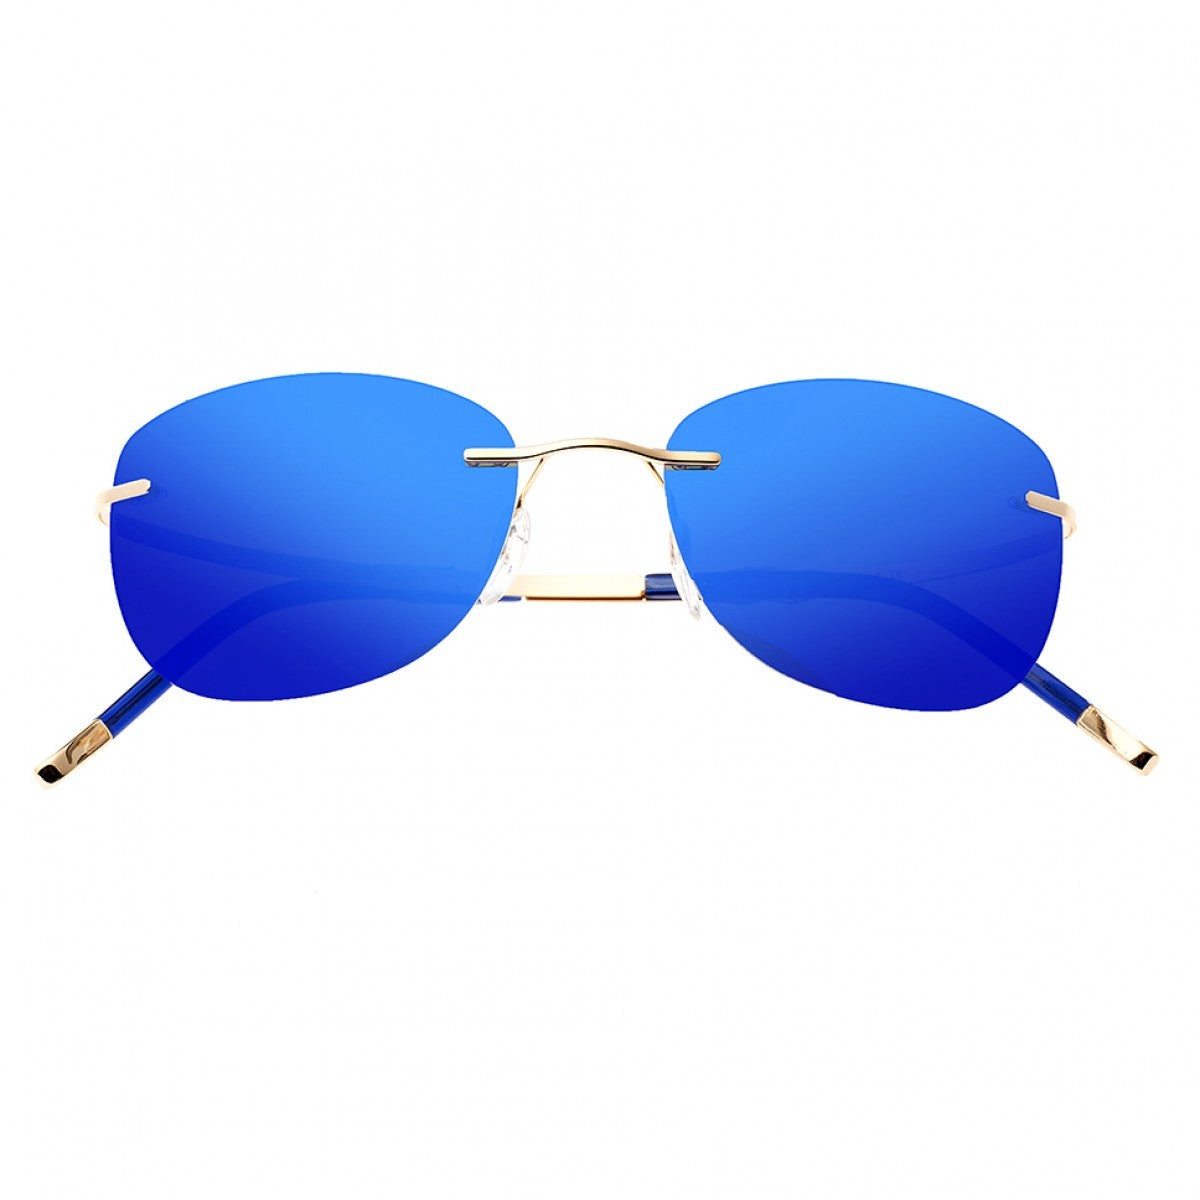 Breed Adhara Polarized Sunglasses - Gold/Blue - BSG043GD